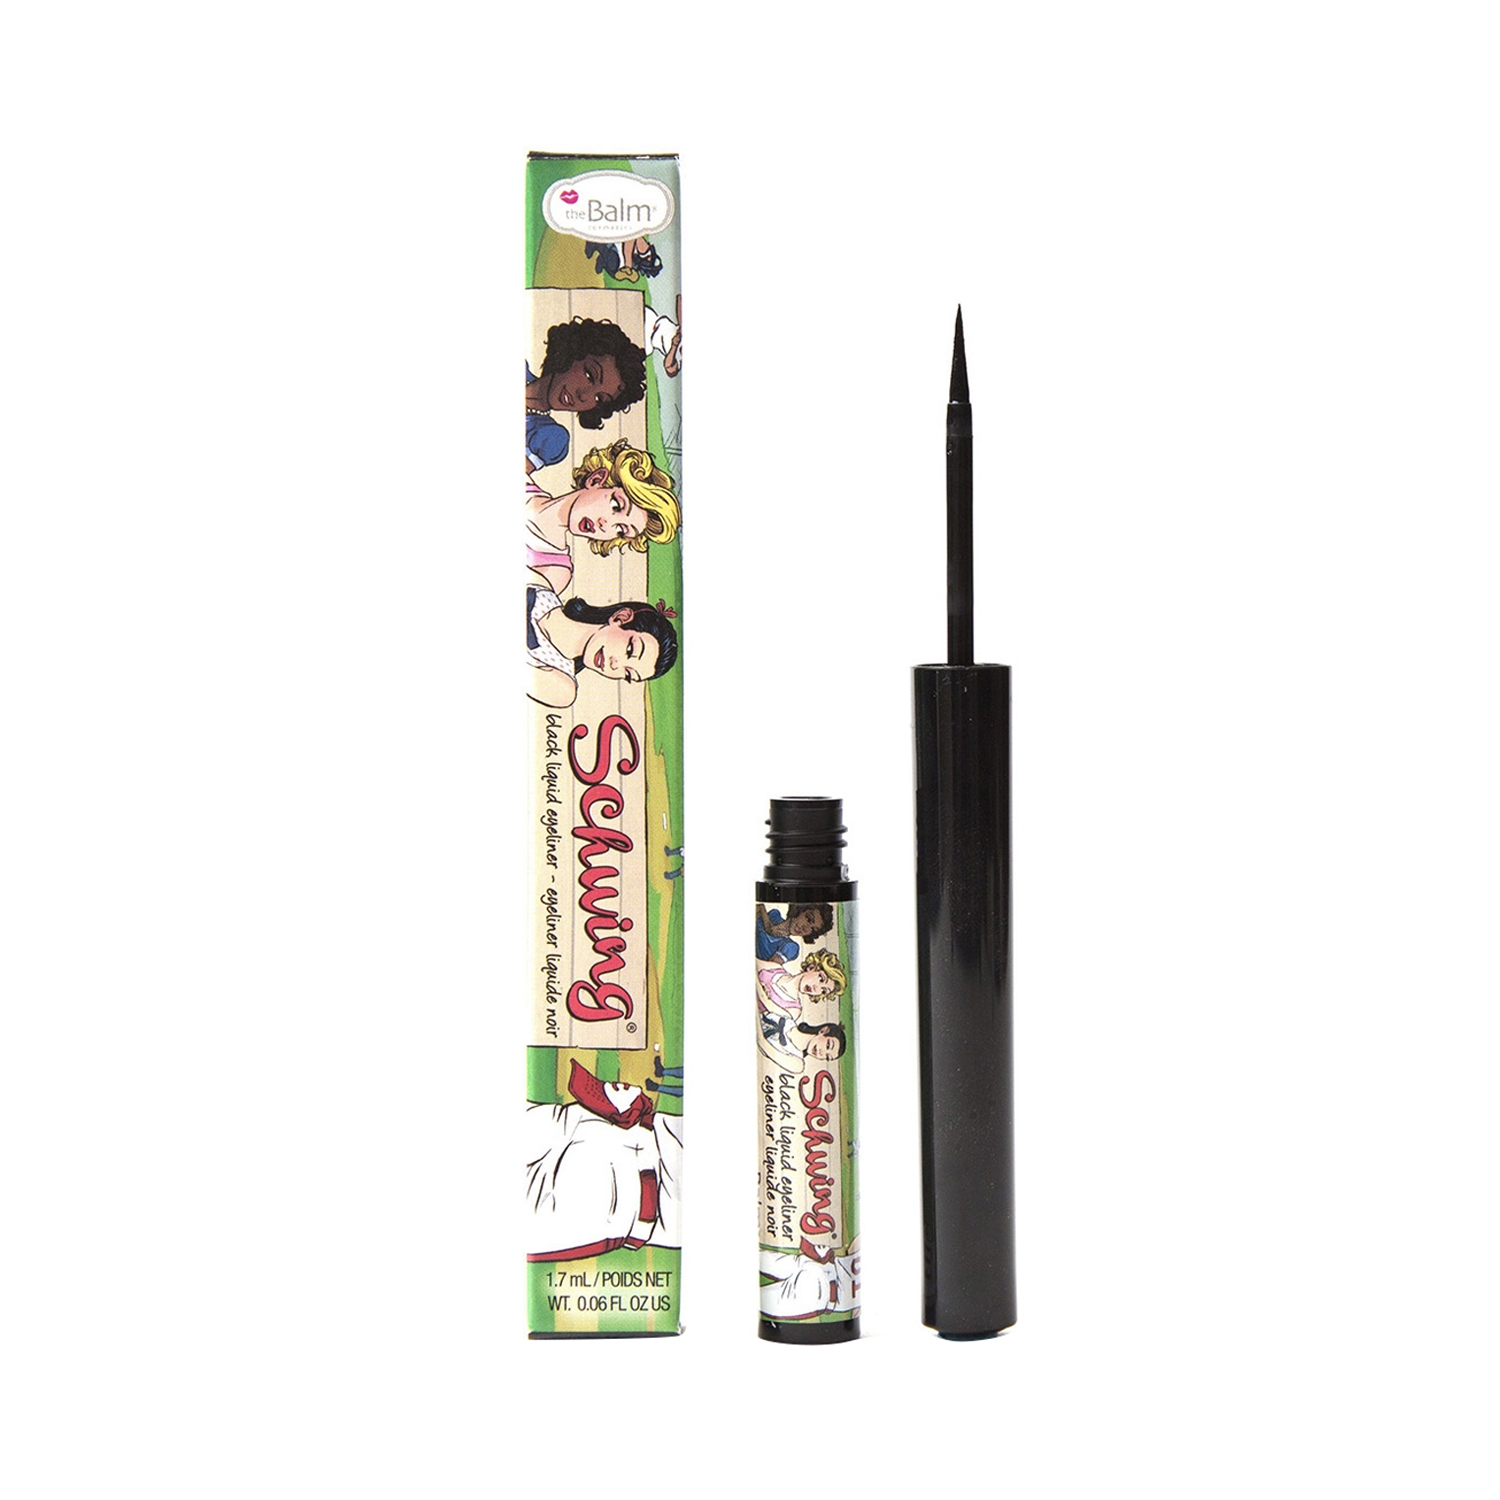 theBalm Cosmetics Schwing Liquid Eyeliner - Black (1.7ml)